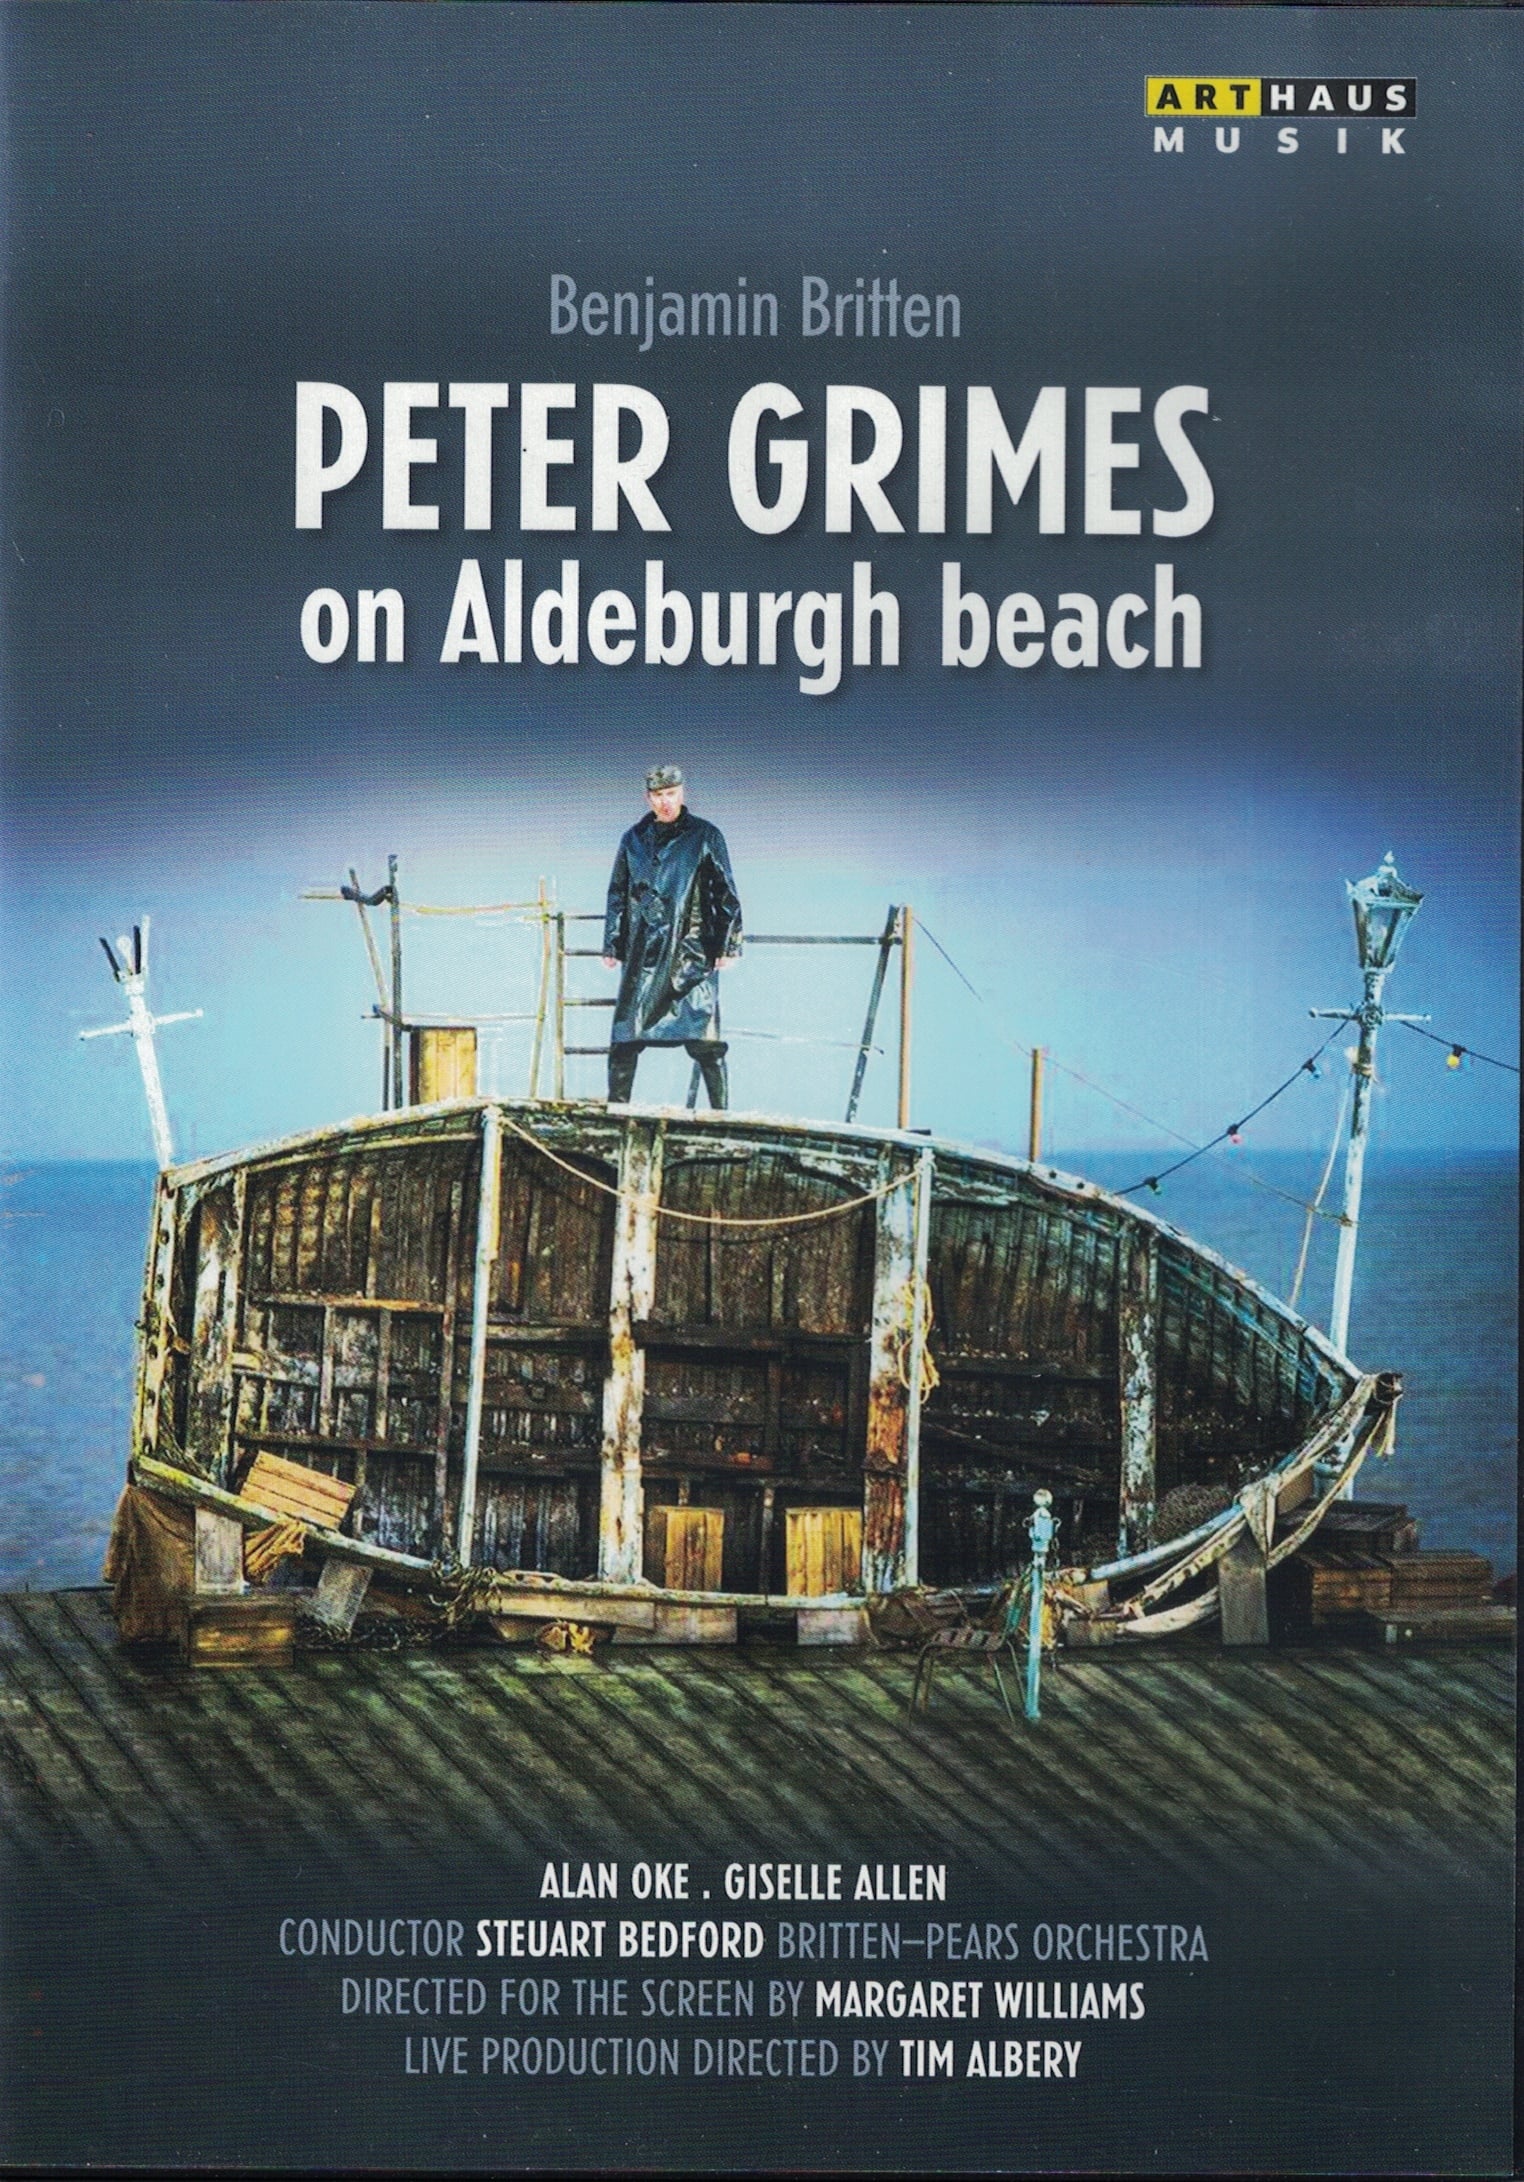 Peter Grimes on Aldeburgh Beach